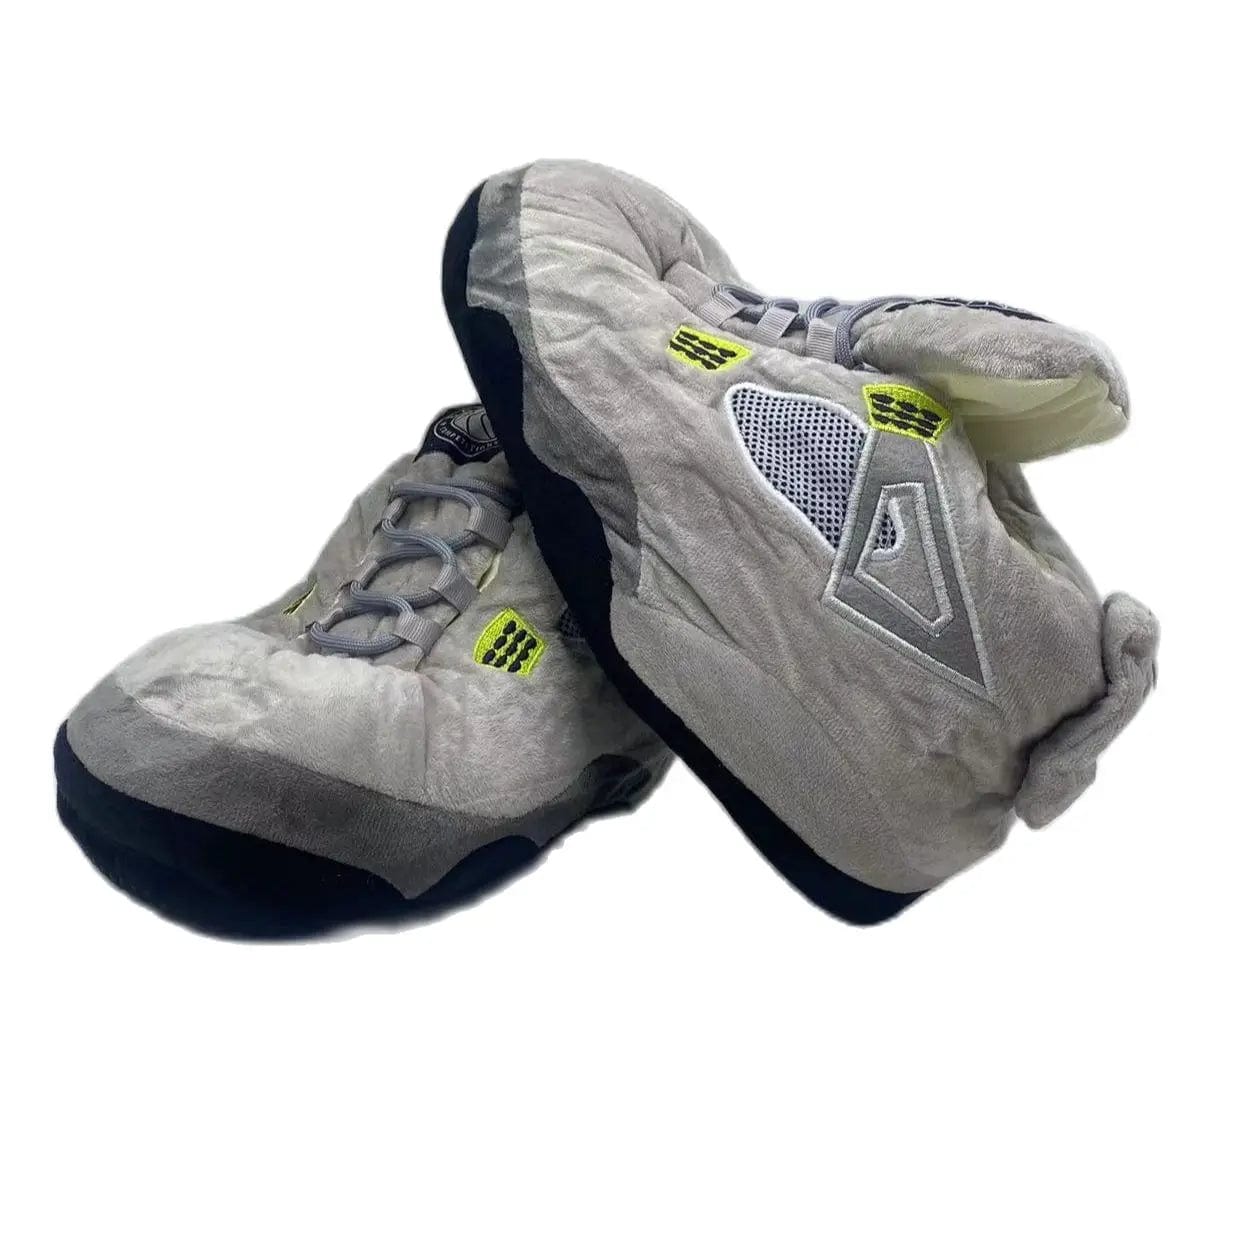 HomeBound Essentials As shown7 / 7(36-44 One Size) Jordan Max Air Retro Sneaker Slipper Shoes